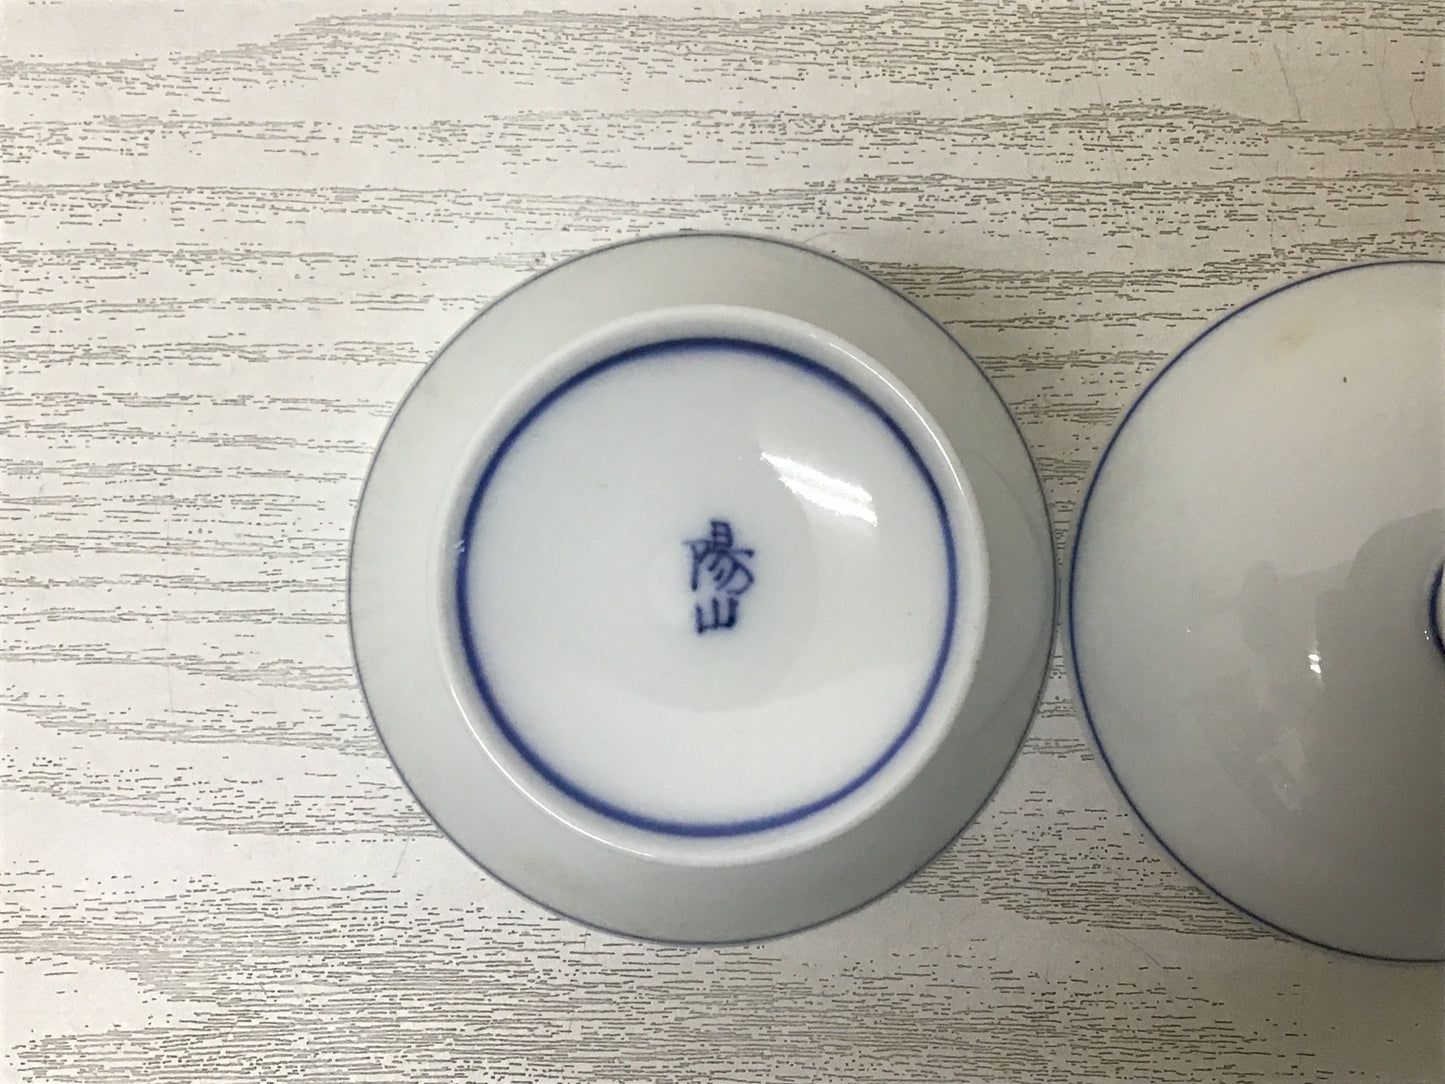 Y2727 CUP Kyo-ware pair glassware signed box Japanese antique tableware vintage